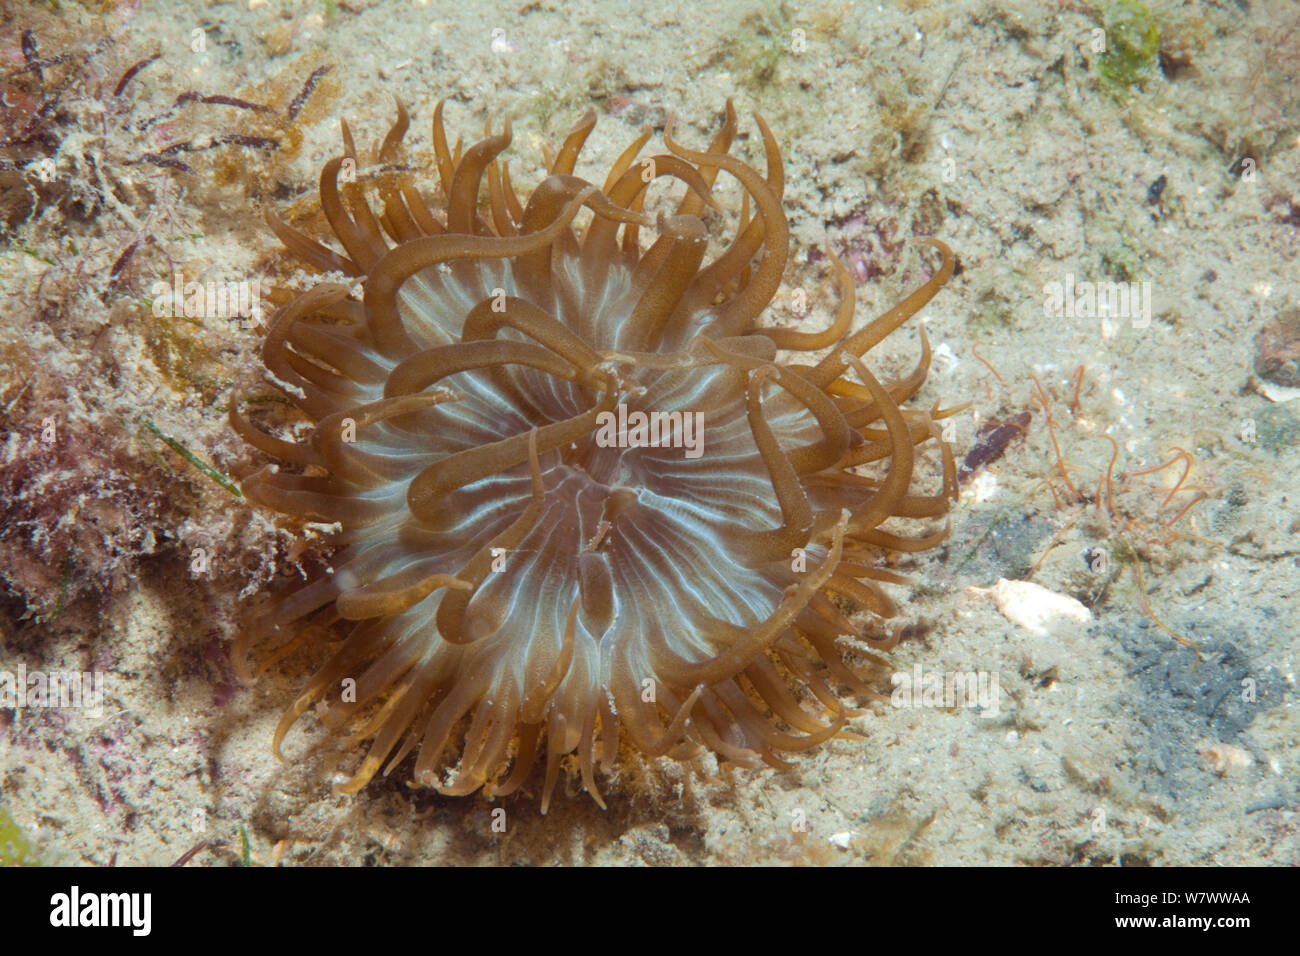 Trumpet anemone (Aiptasia mutabilis) Jersey, British Channel Islands. Stock Photo